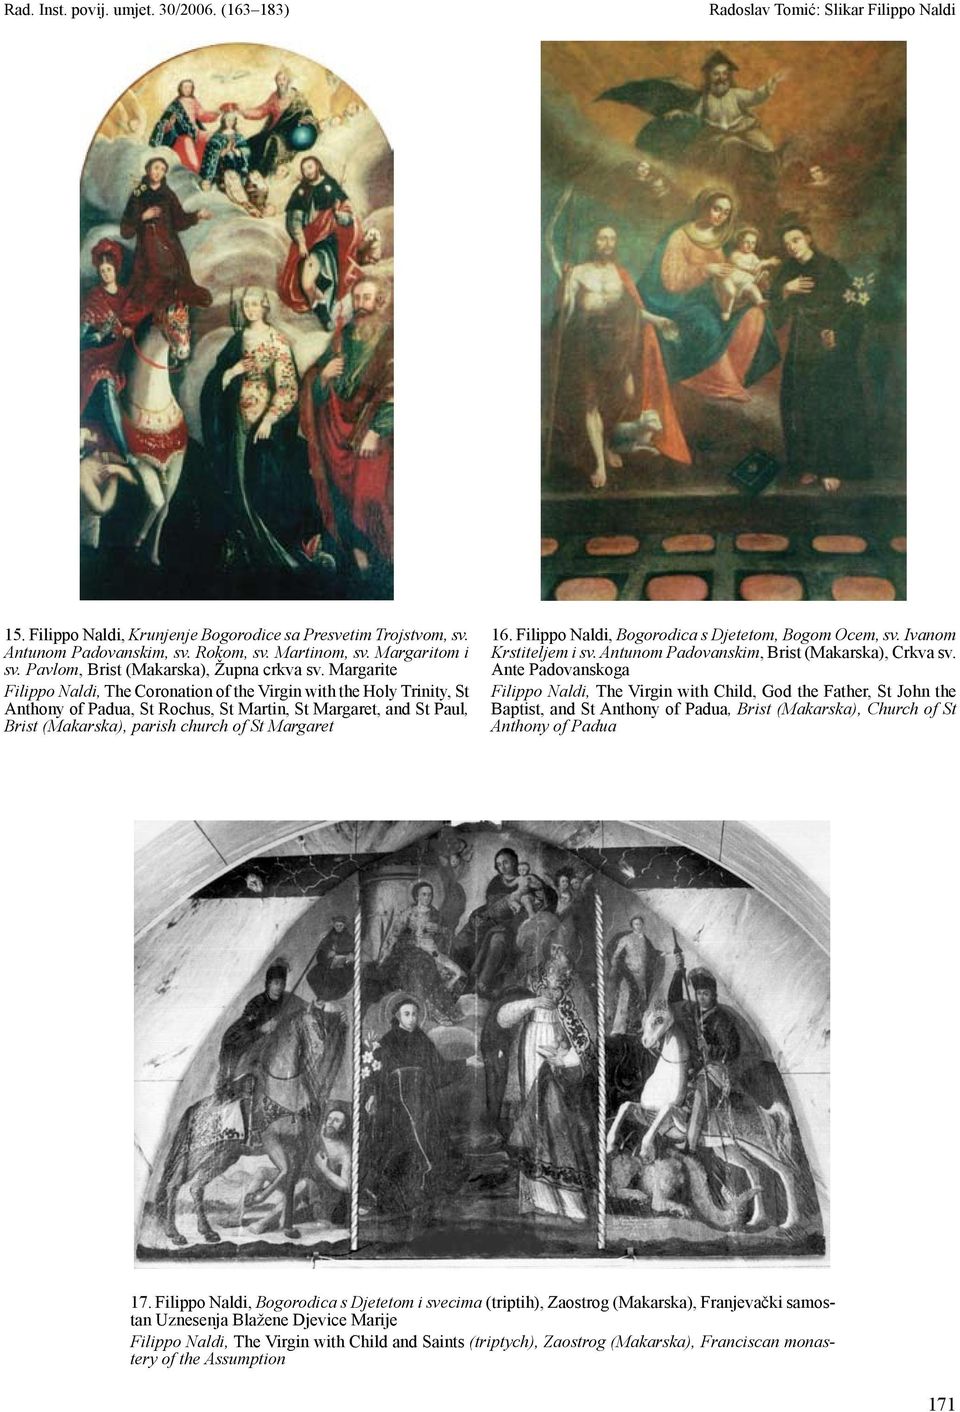 Margarite Filippo Naldi, The Coronation of the Virgin with the Holy Trinity, St Anthony of Padua, St Rochus, St Martin, St Margaret, and St Paul, Brist (Makarska), parish church of St Margaret 16.